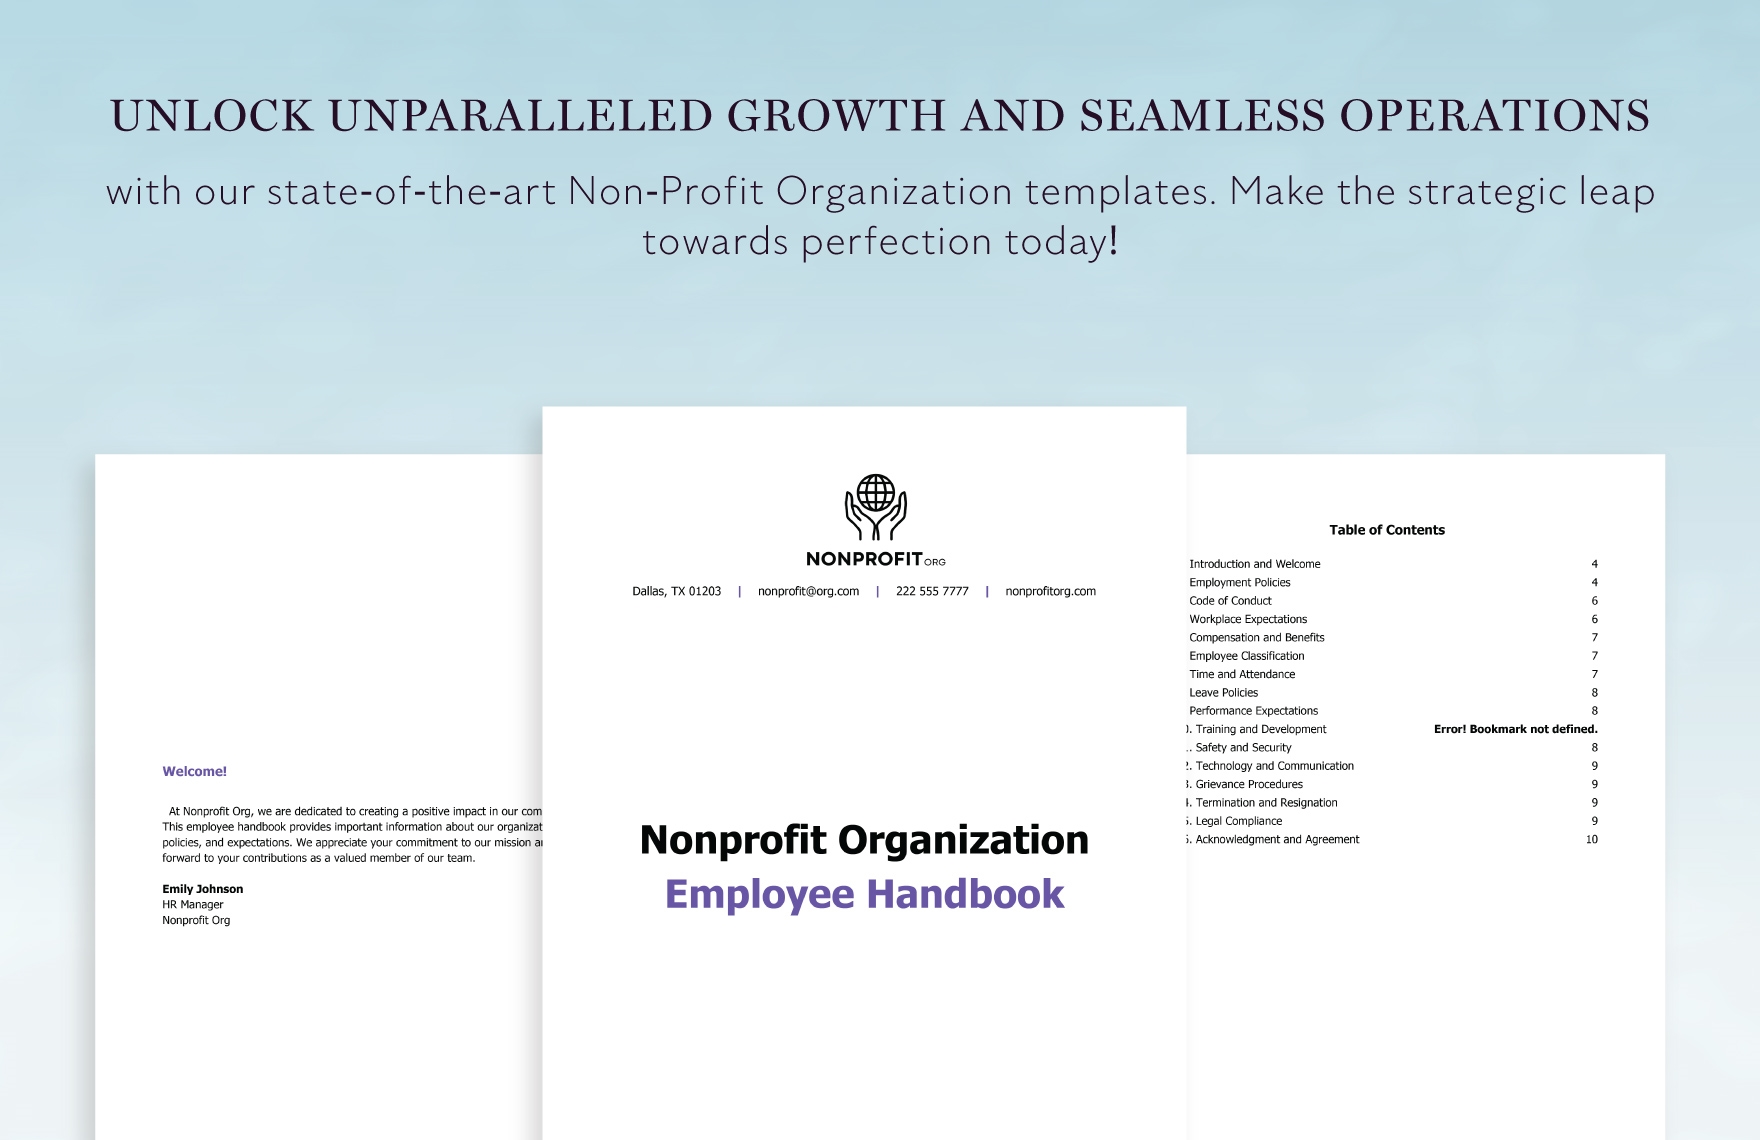 Nonprofit Organization Employee Handbook Template